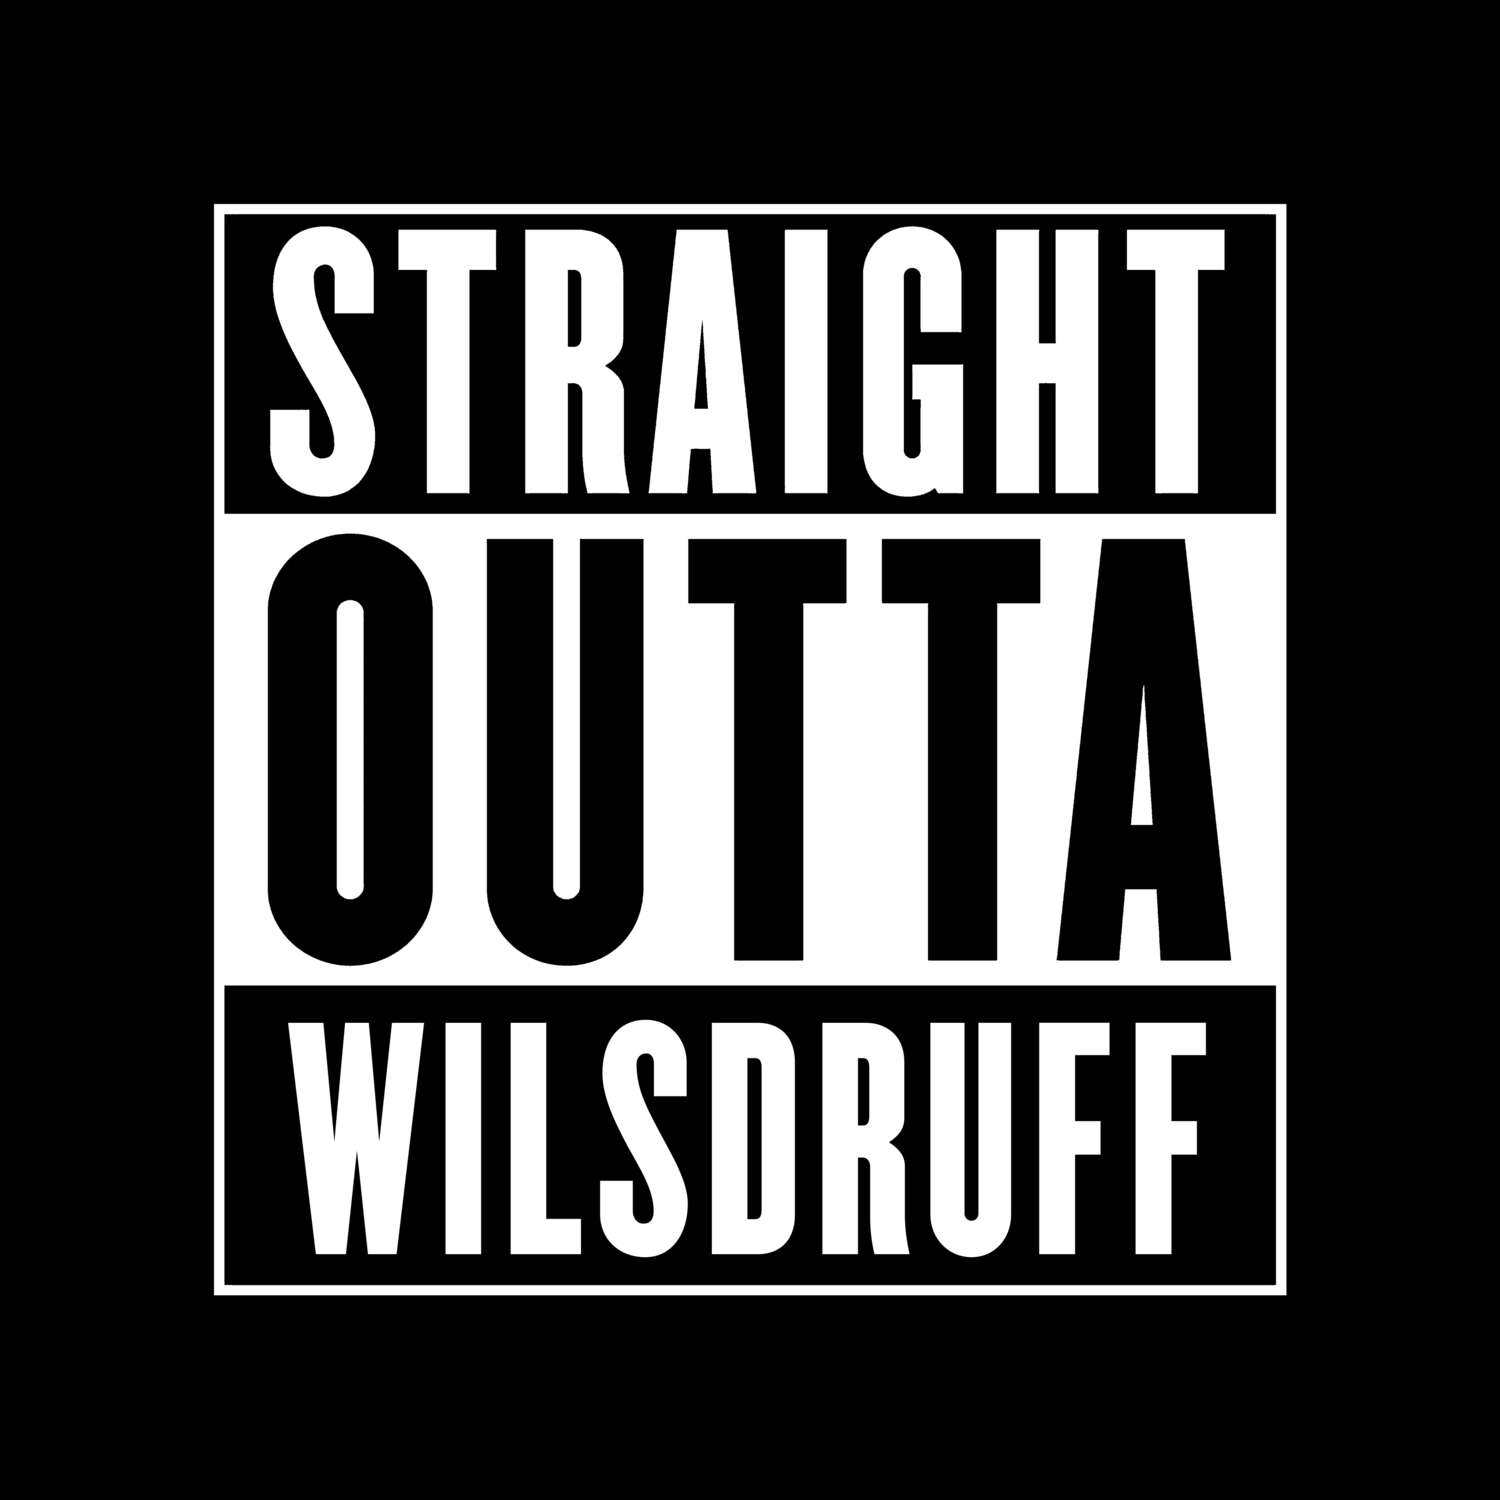 Wilsdruff T-Shirt »Straight Outta«